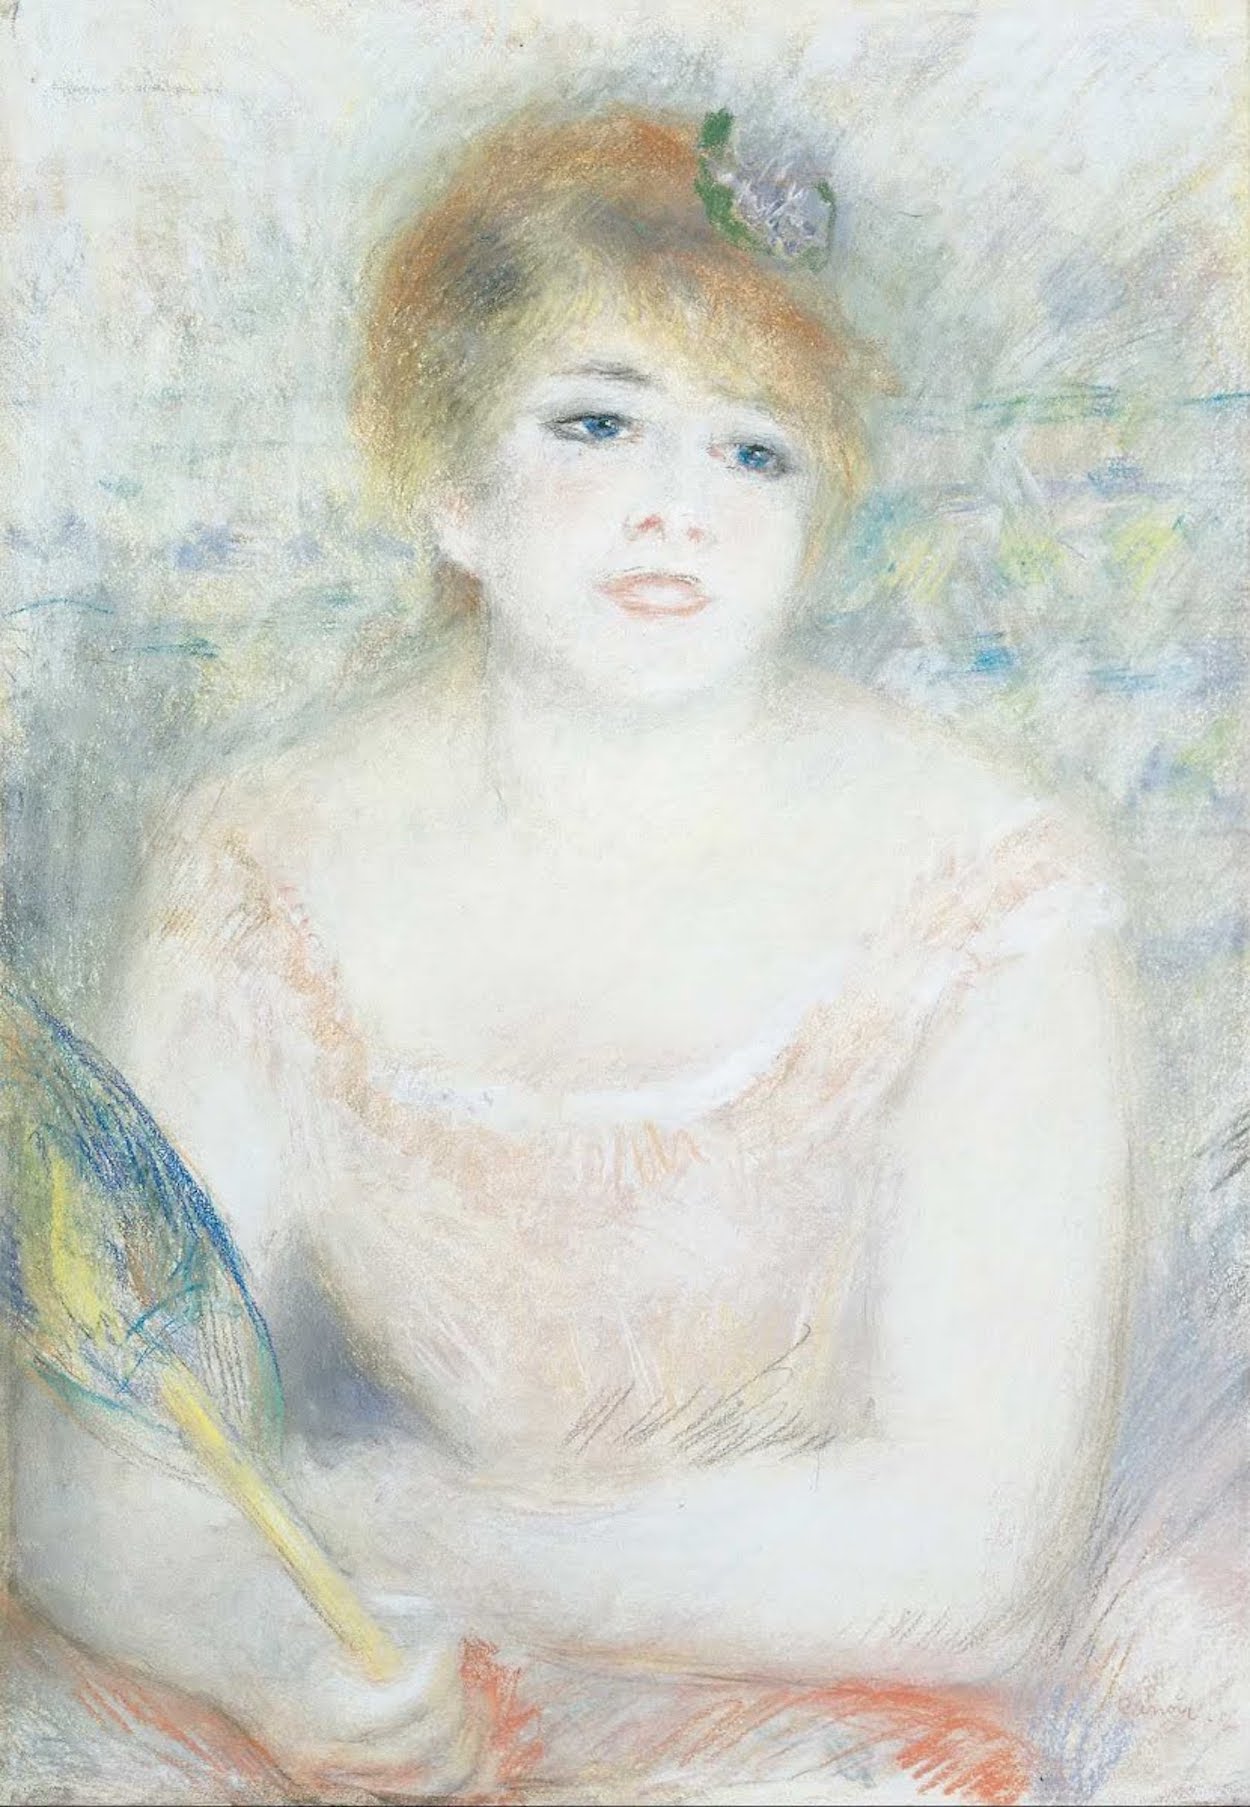 Mademoiselle Jeanne Samary by Pierre-Auguste Renoir - c. 1878 - 69,7 x 47,7 cm El Museo de Arte de Cincinnati